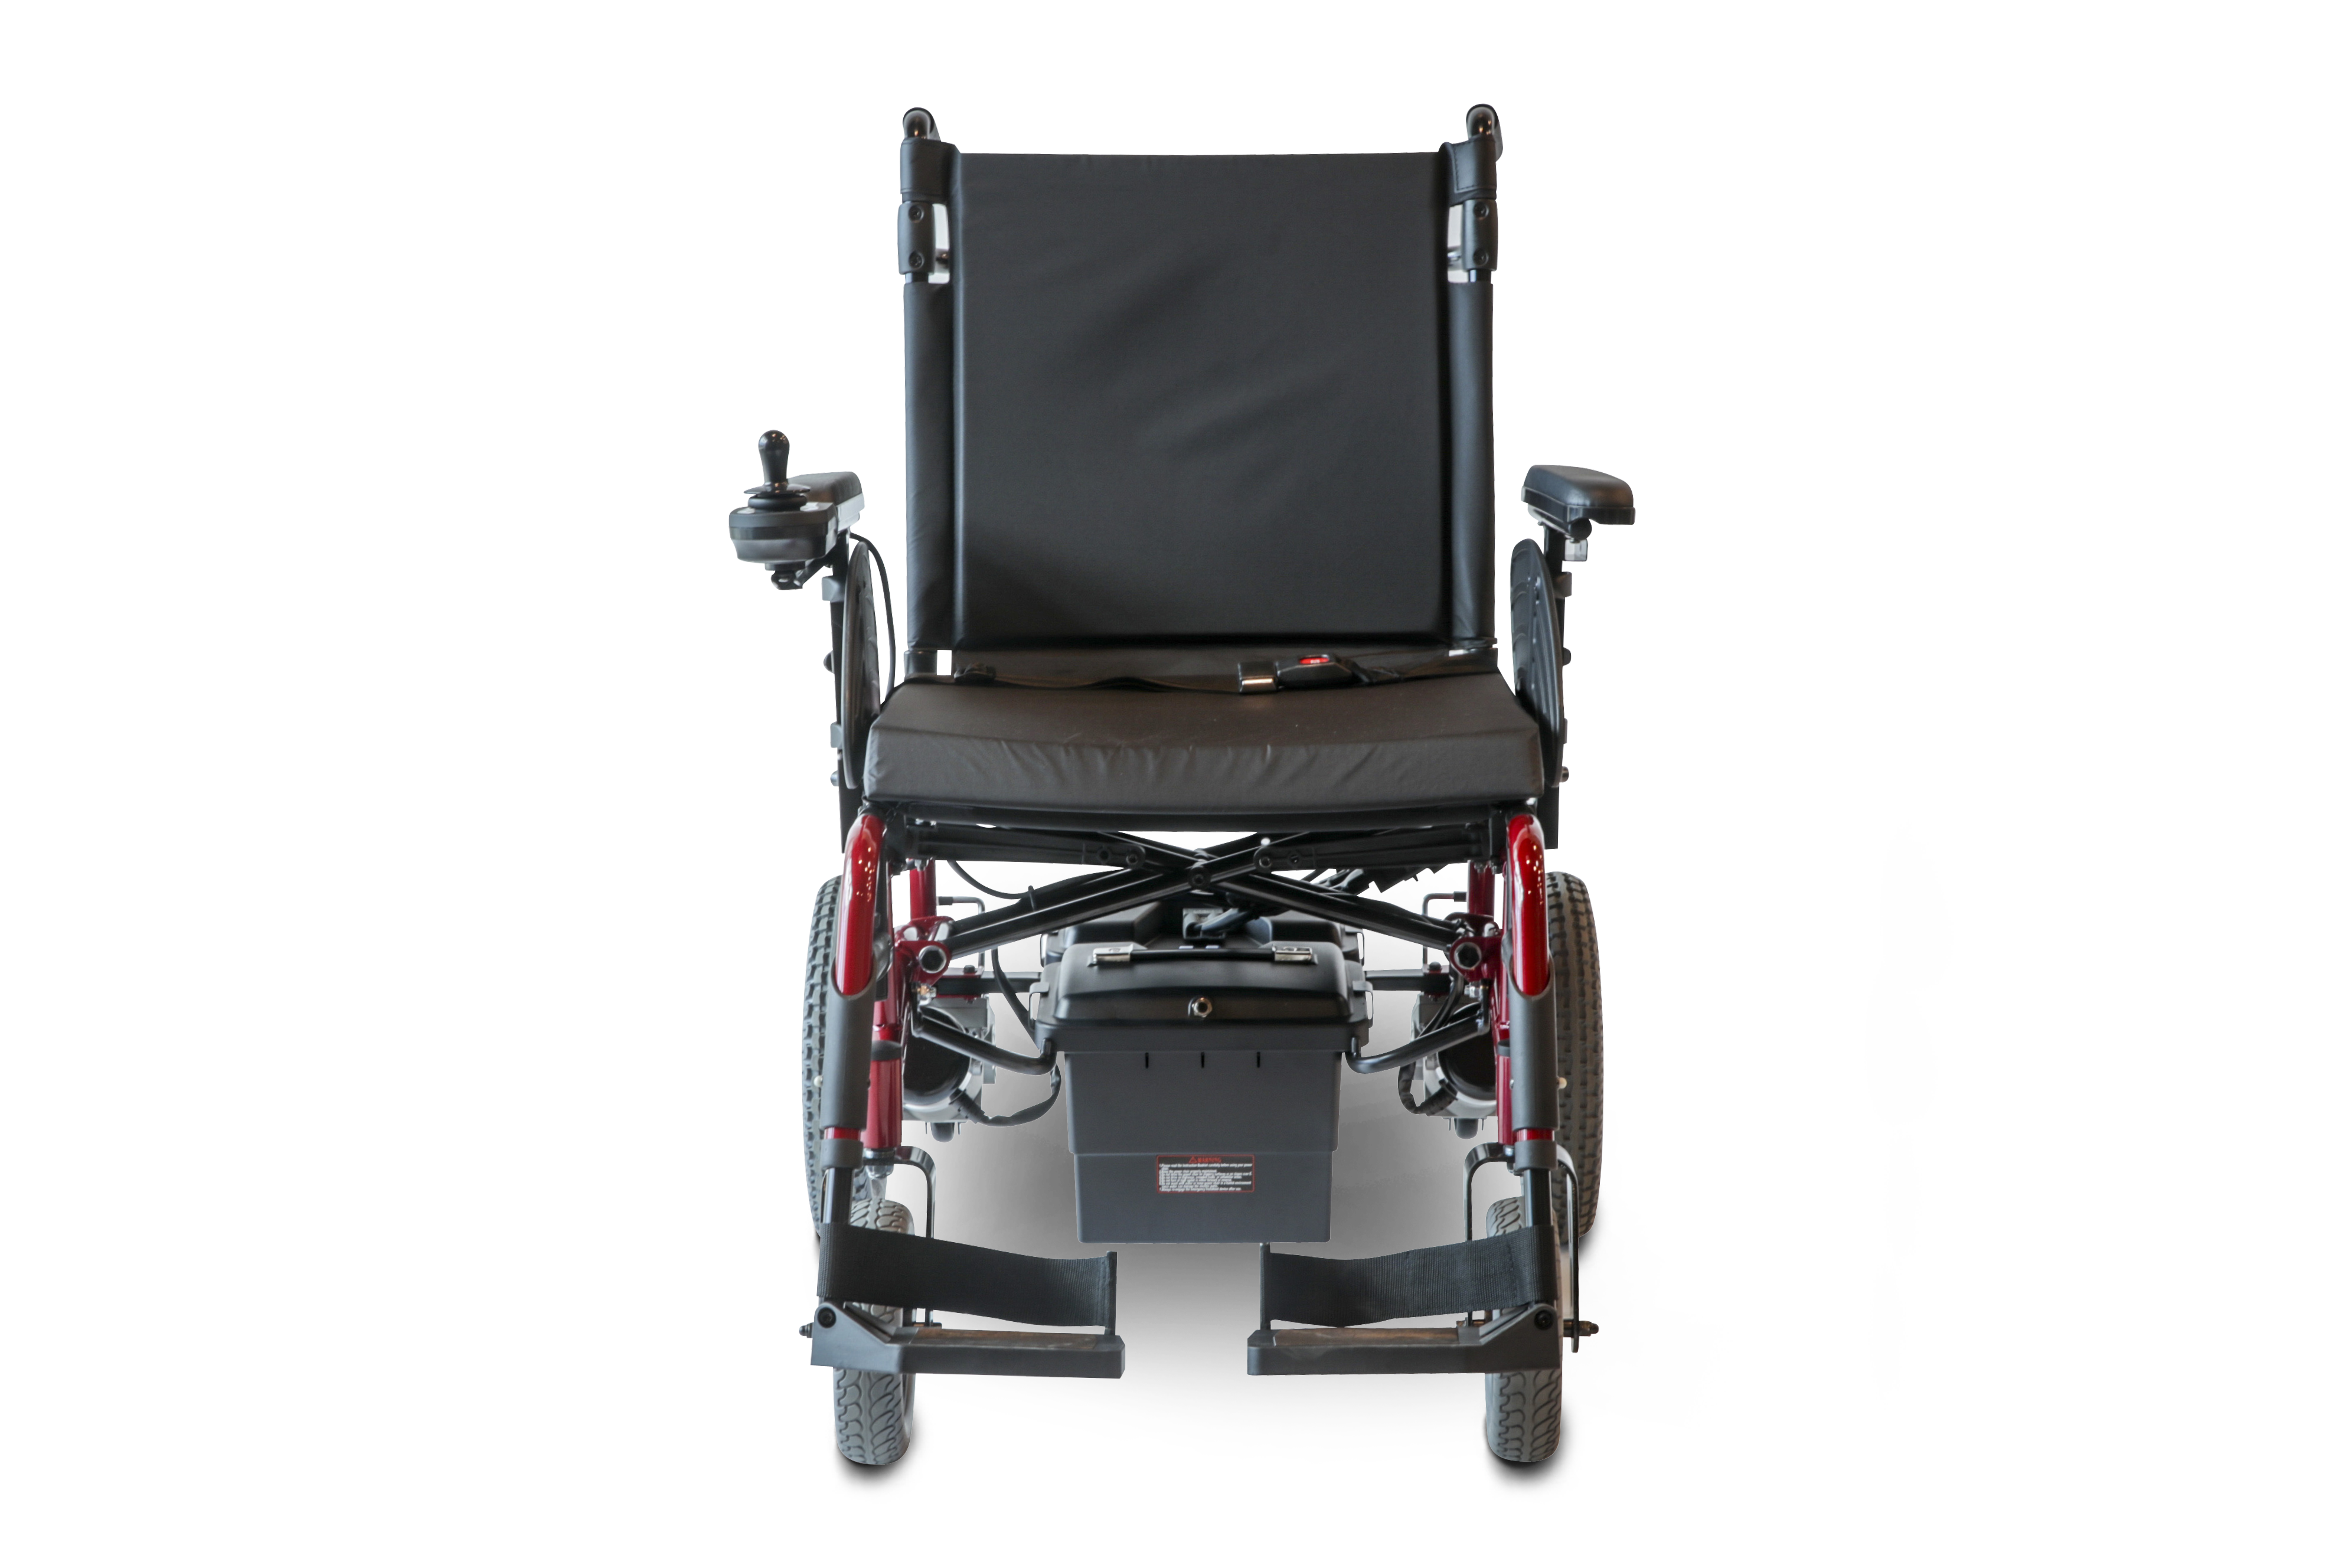 power wheelchair EW-M47 Heavy-Duty Folding Lightweight Travel Power Wheelchair By E-Wheel Medical - PureUps